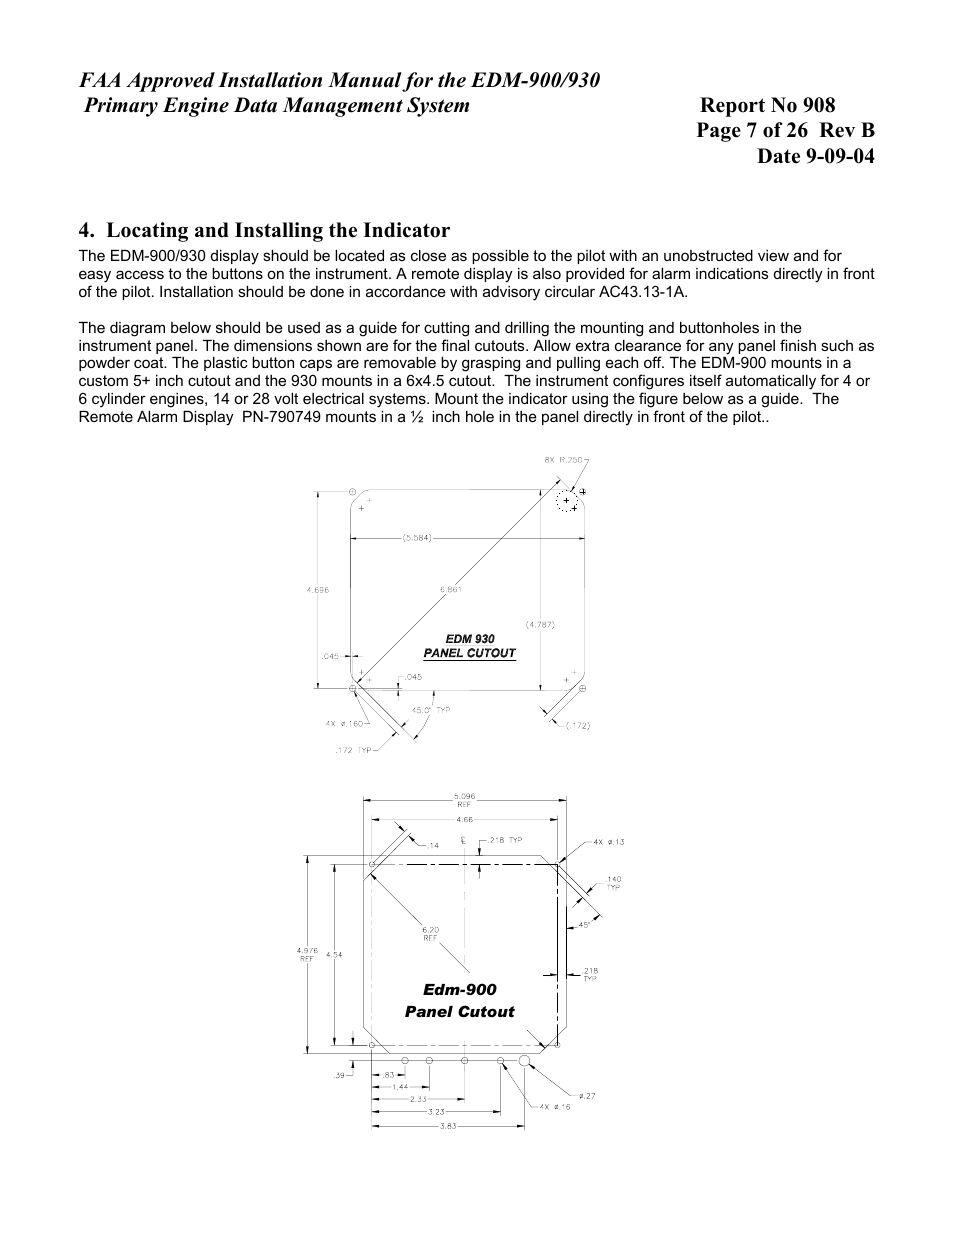 EDM 960 Twin Panel Cutout Guide